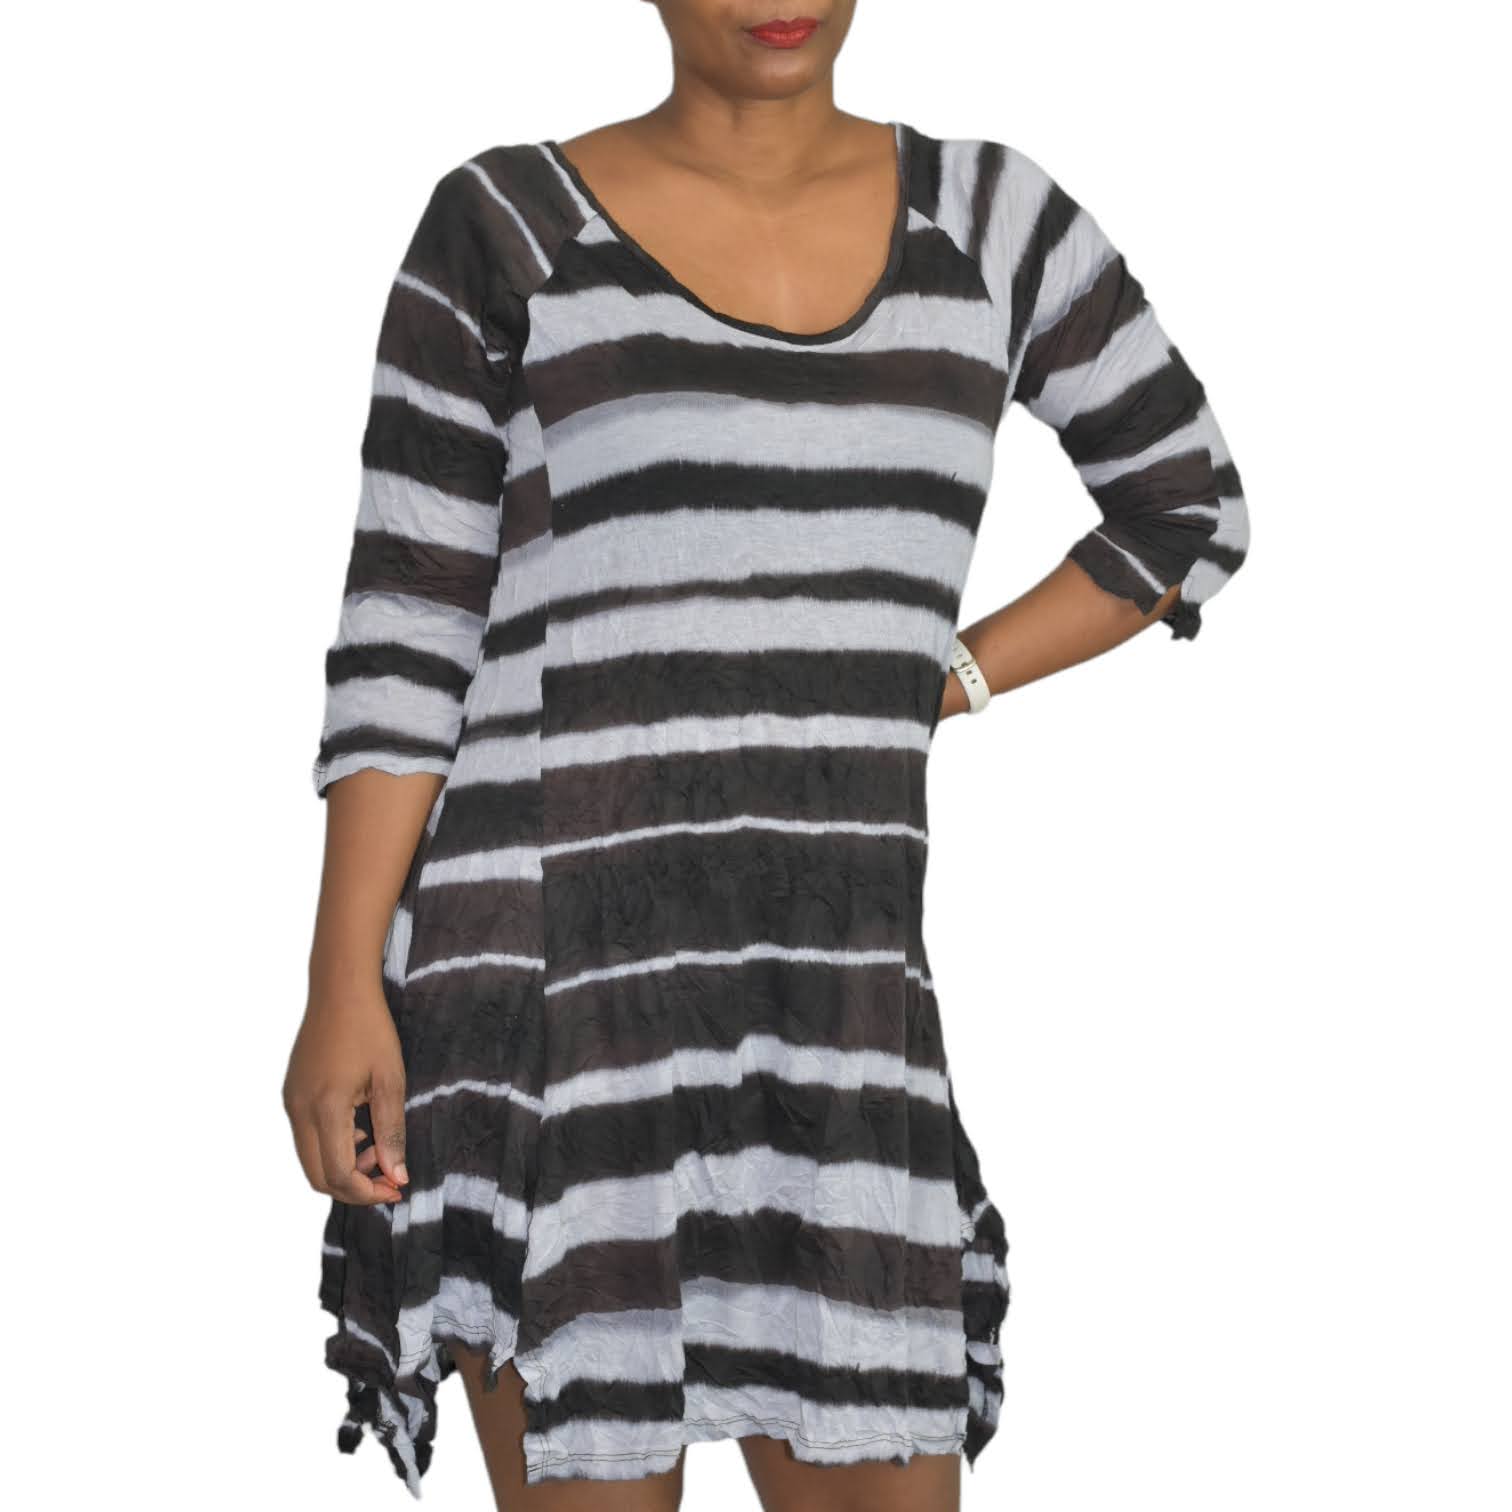 Lauren Vidal Striped Tunic Dress Size Medium